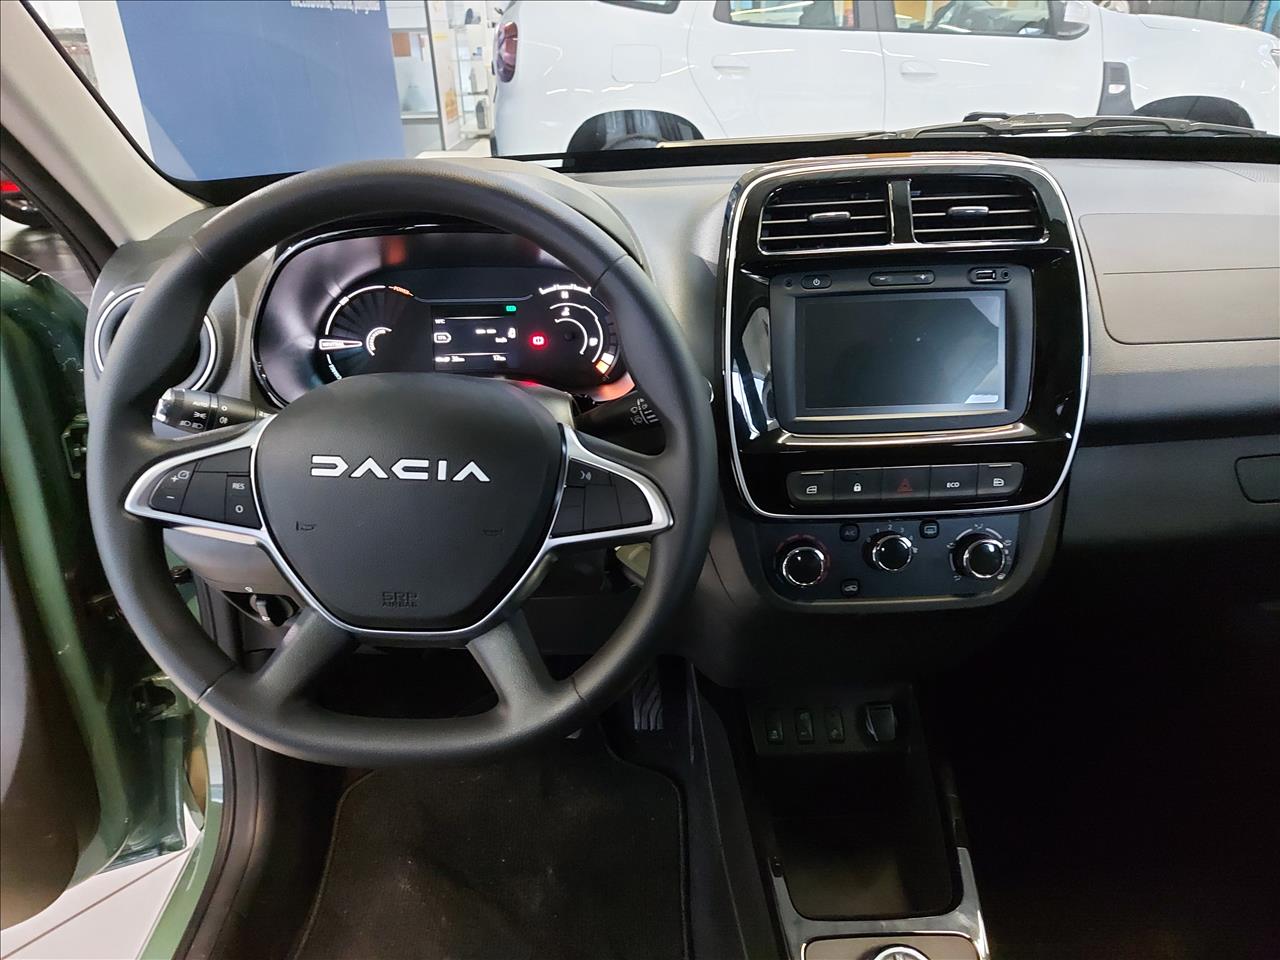 Dacia SPRING Spring Expression 2022